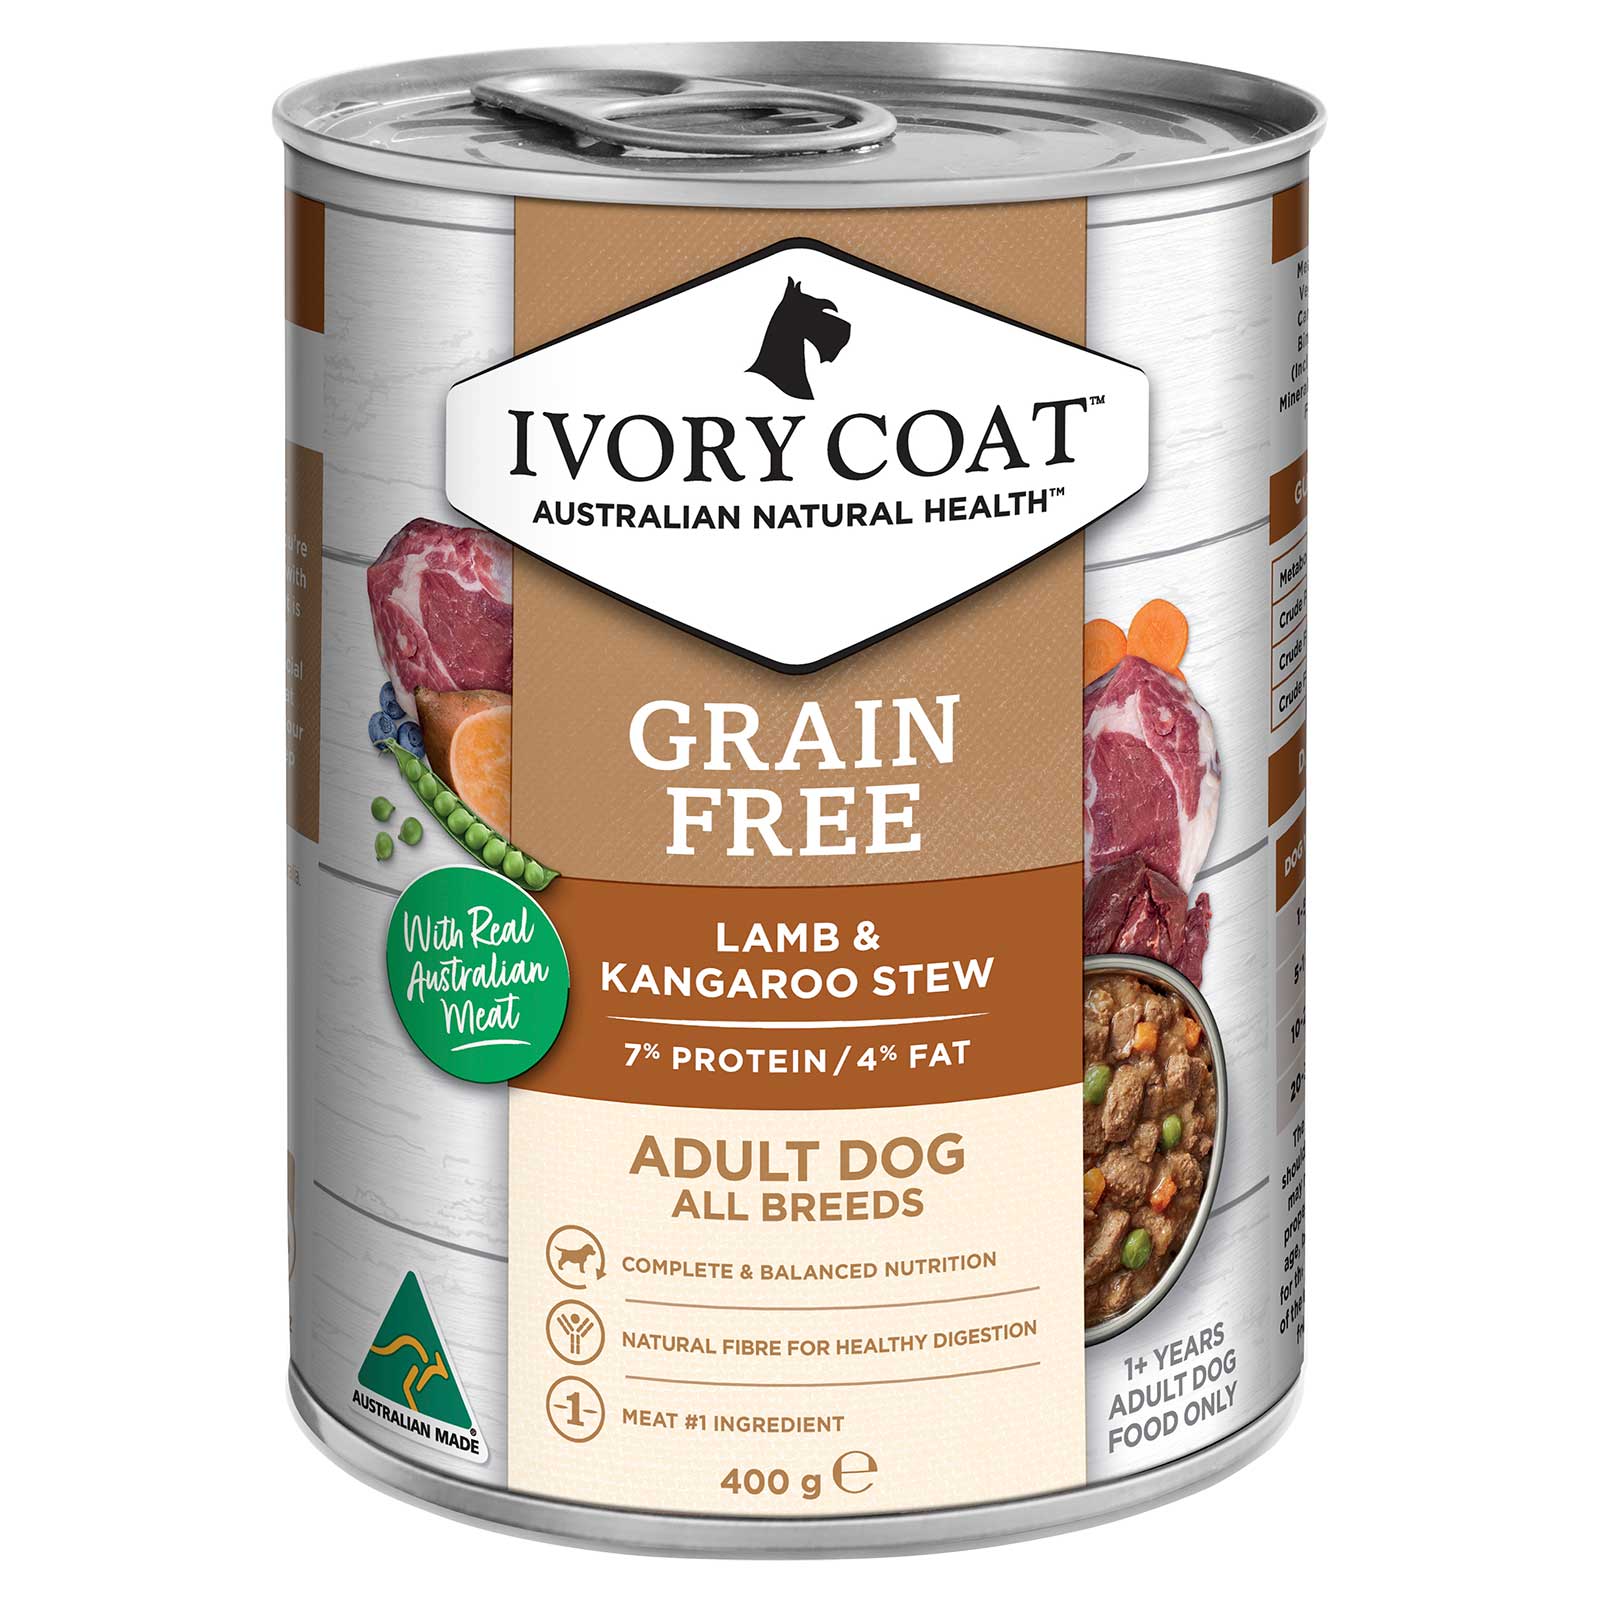 Ivory Coat Grain Free Dog Food Can Adult Lamb & Kangaroo Stew